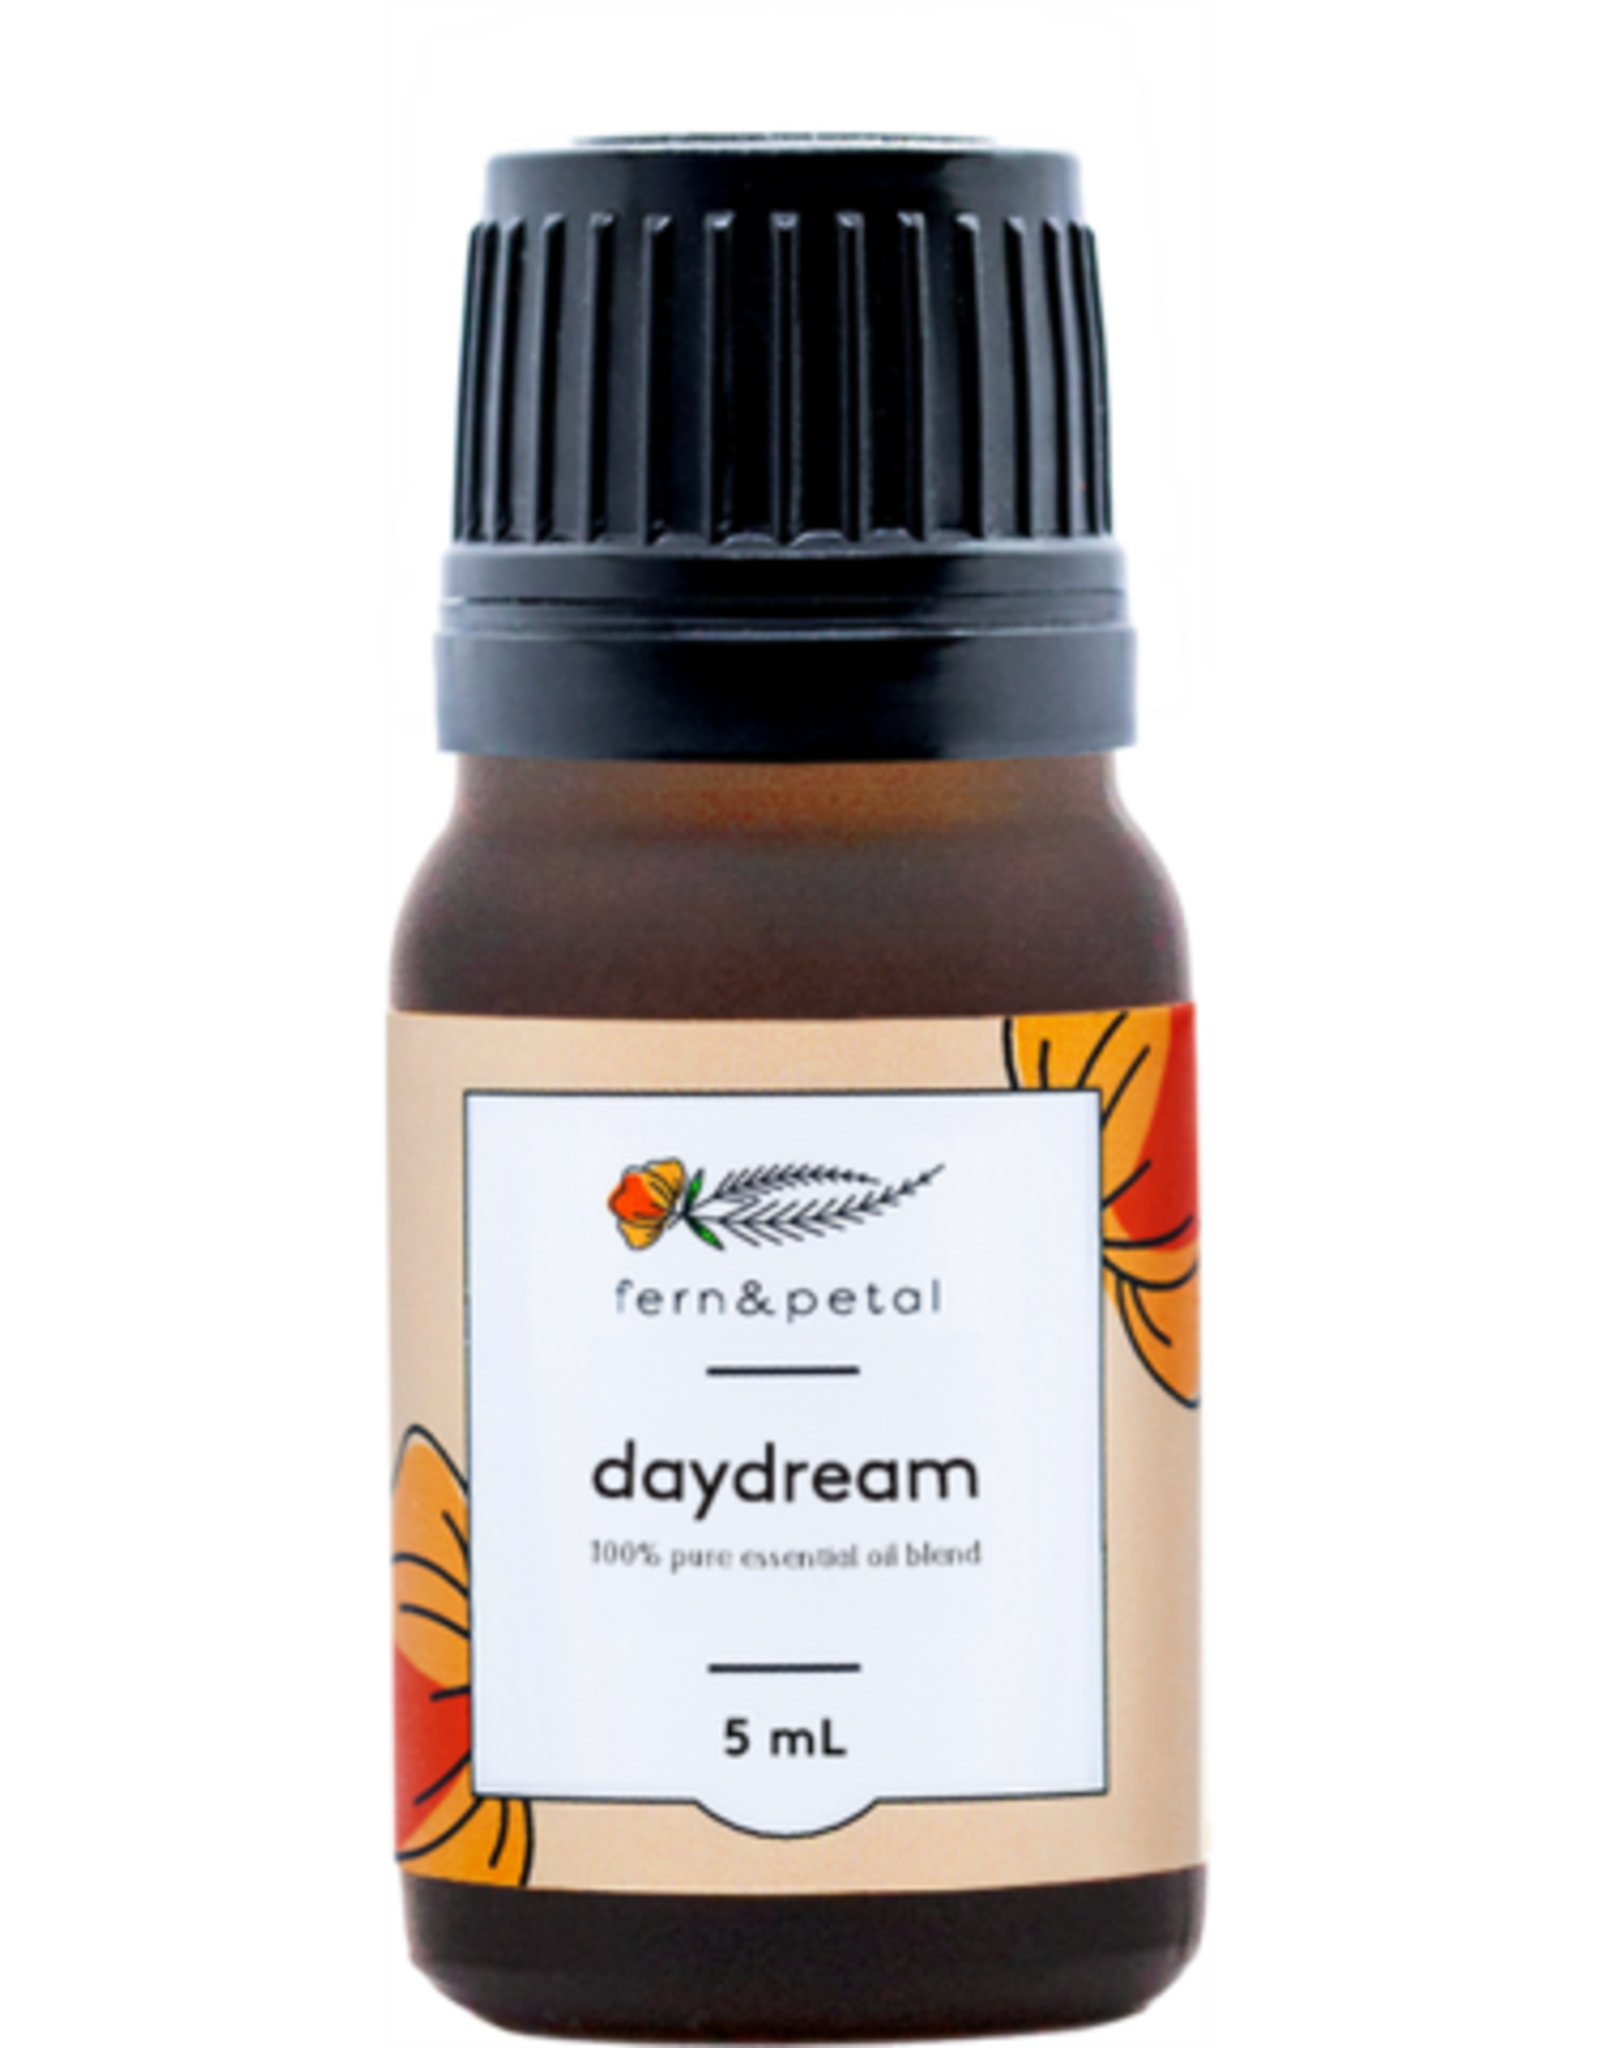 Fern & Petal Daydream Essential oil blend 5ml FP